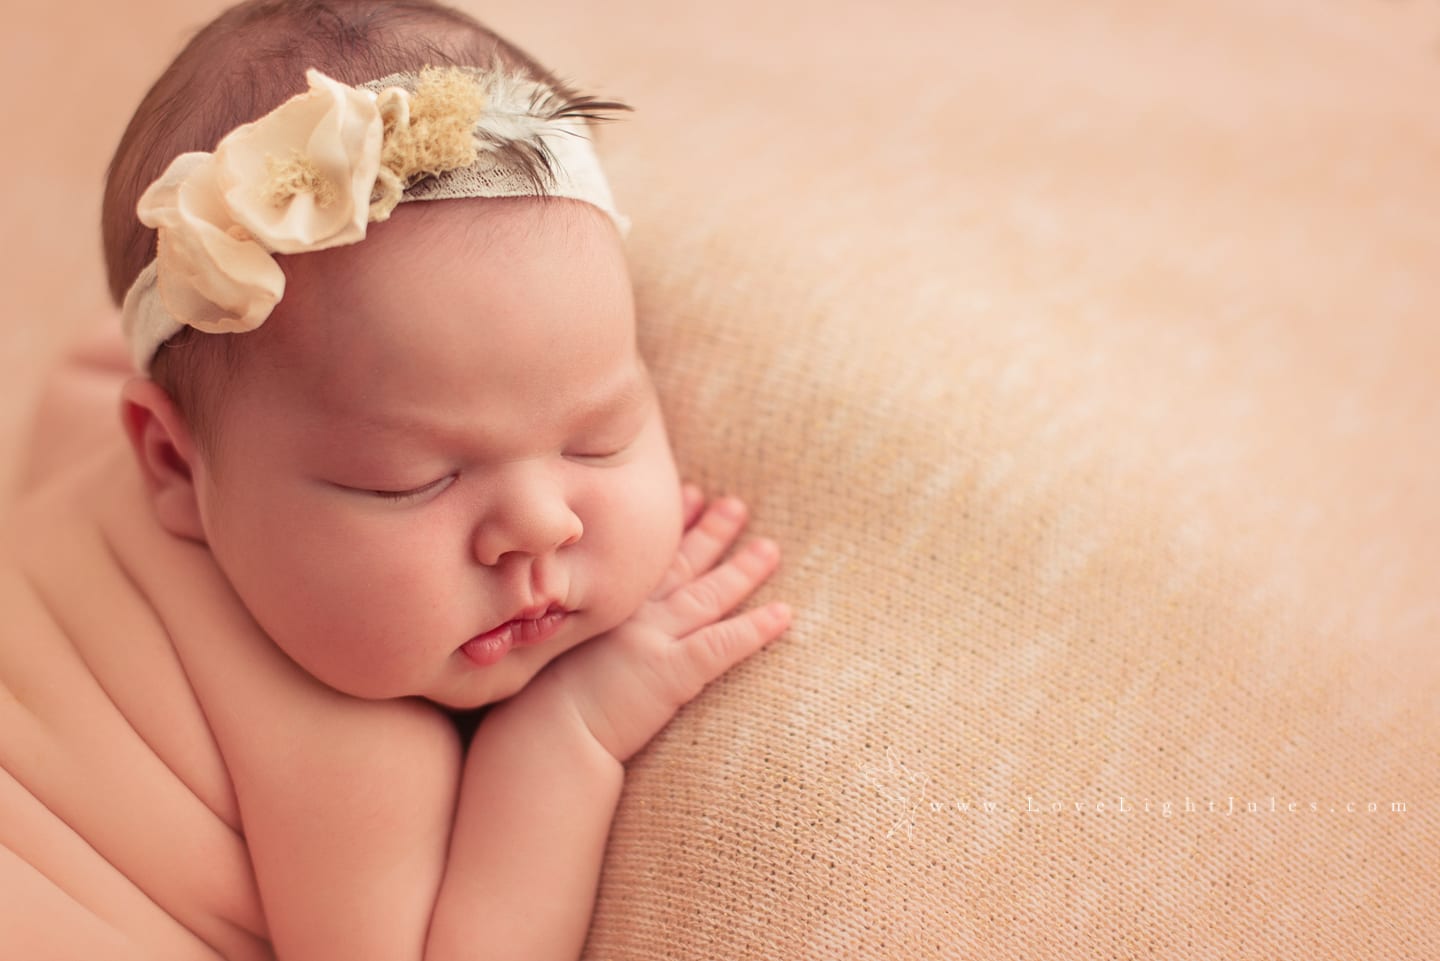 image-by-sacramento-area-newborn-photographer